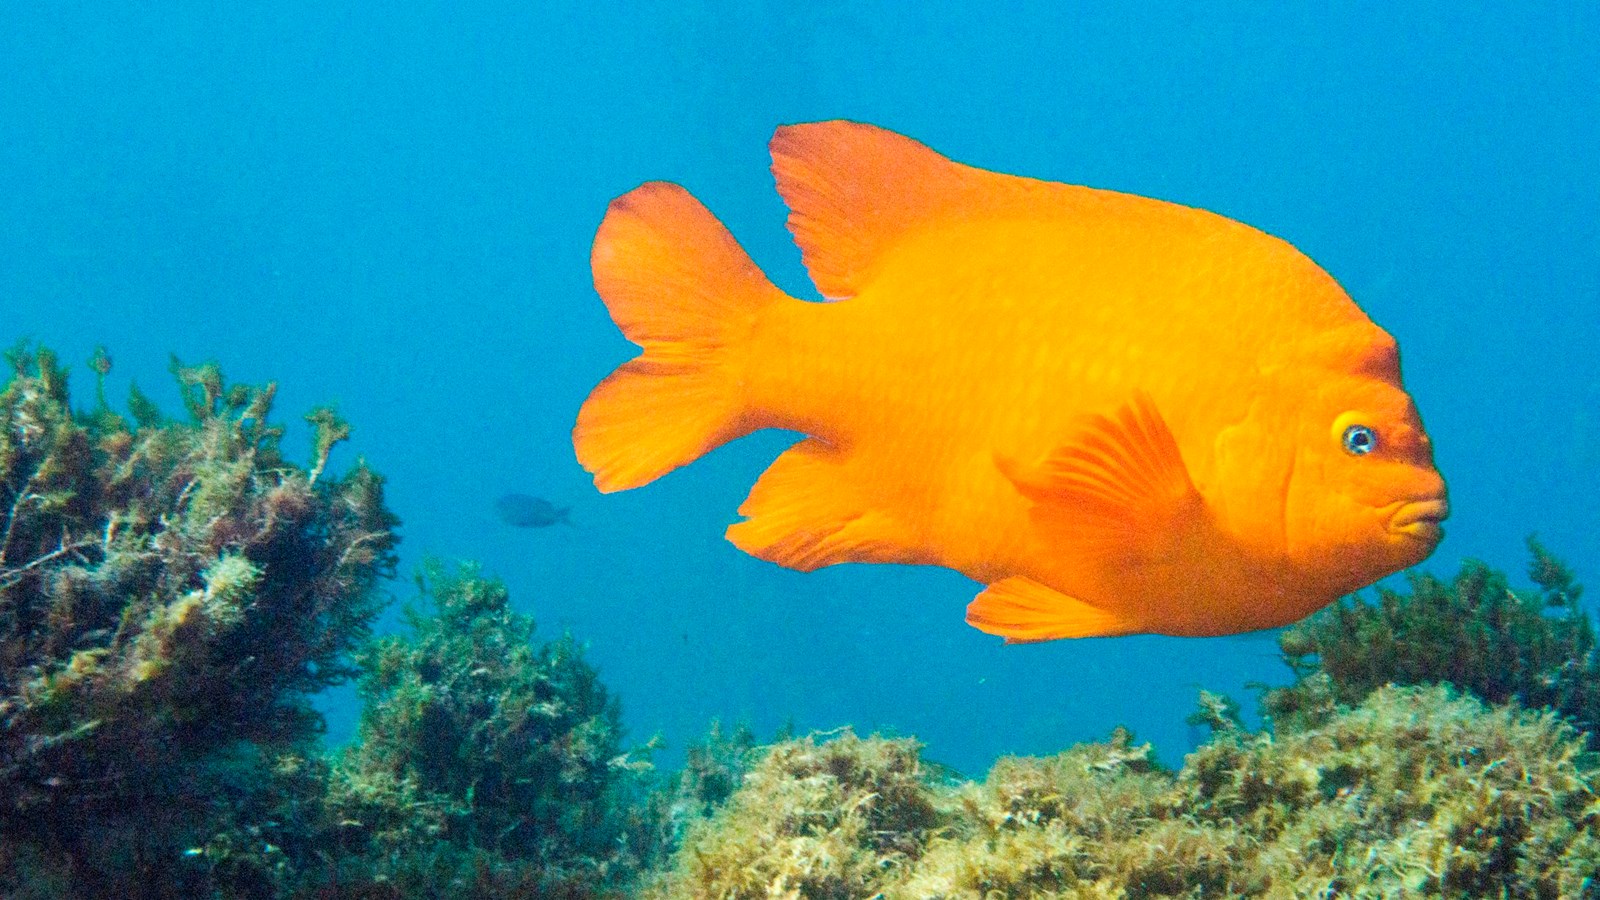 orange fish swimming near rocks